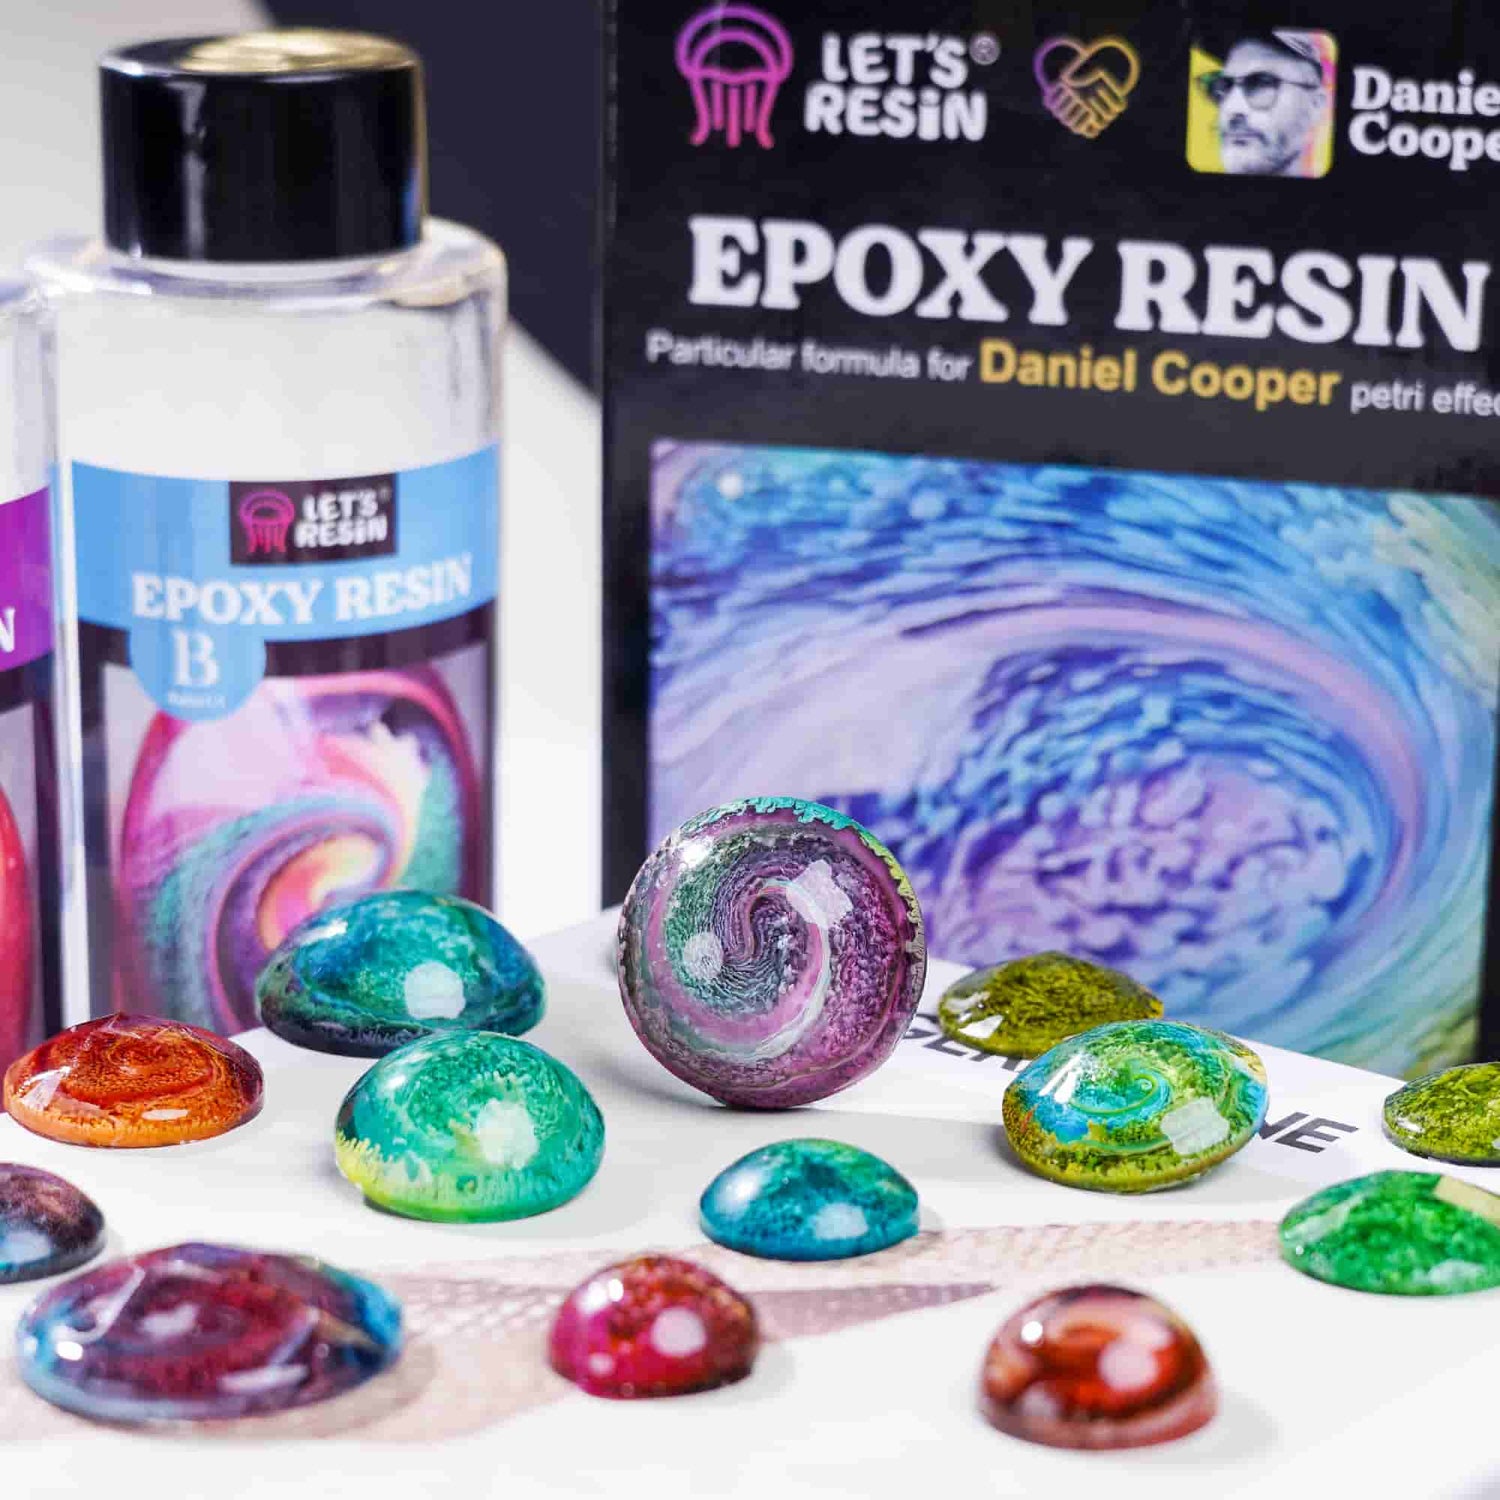 YOBTOP Epoxy Resin 1 Gallon Kit - Yobtop Coating & Casting Resin